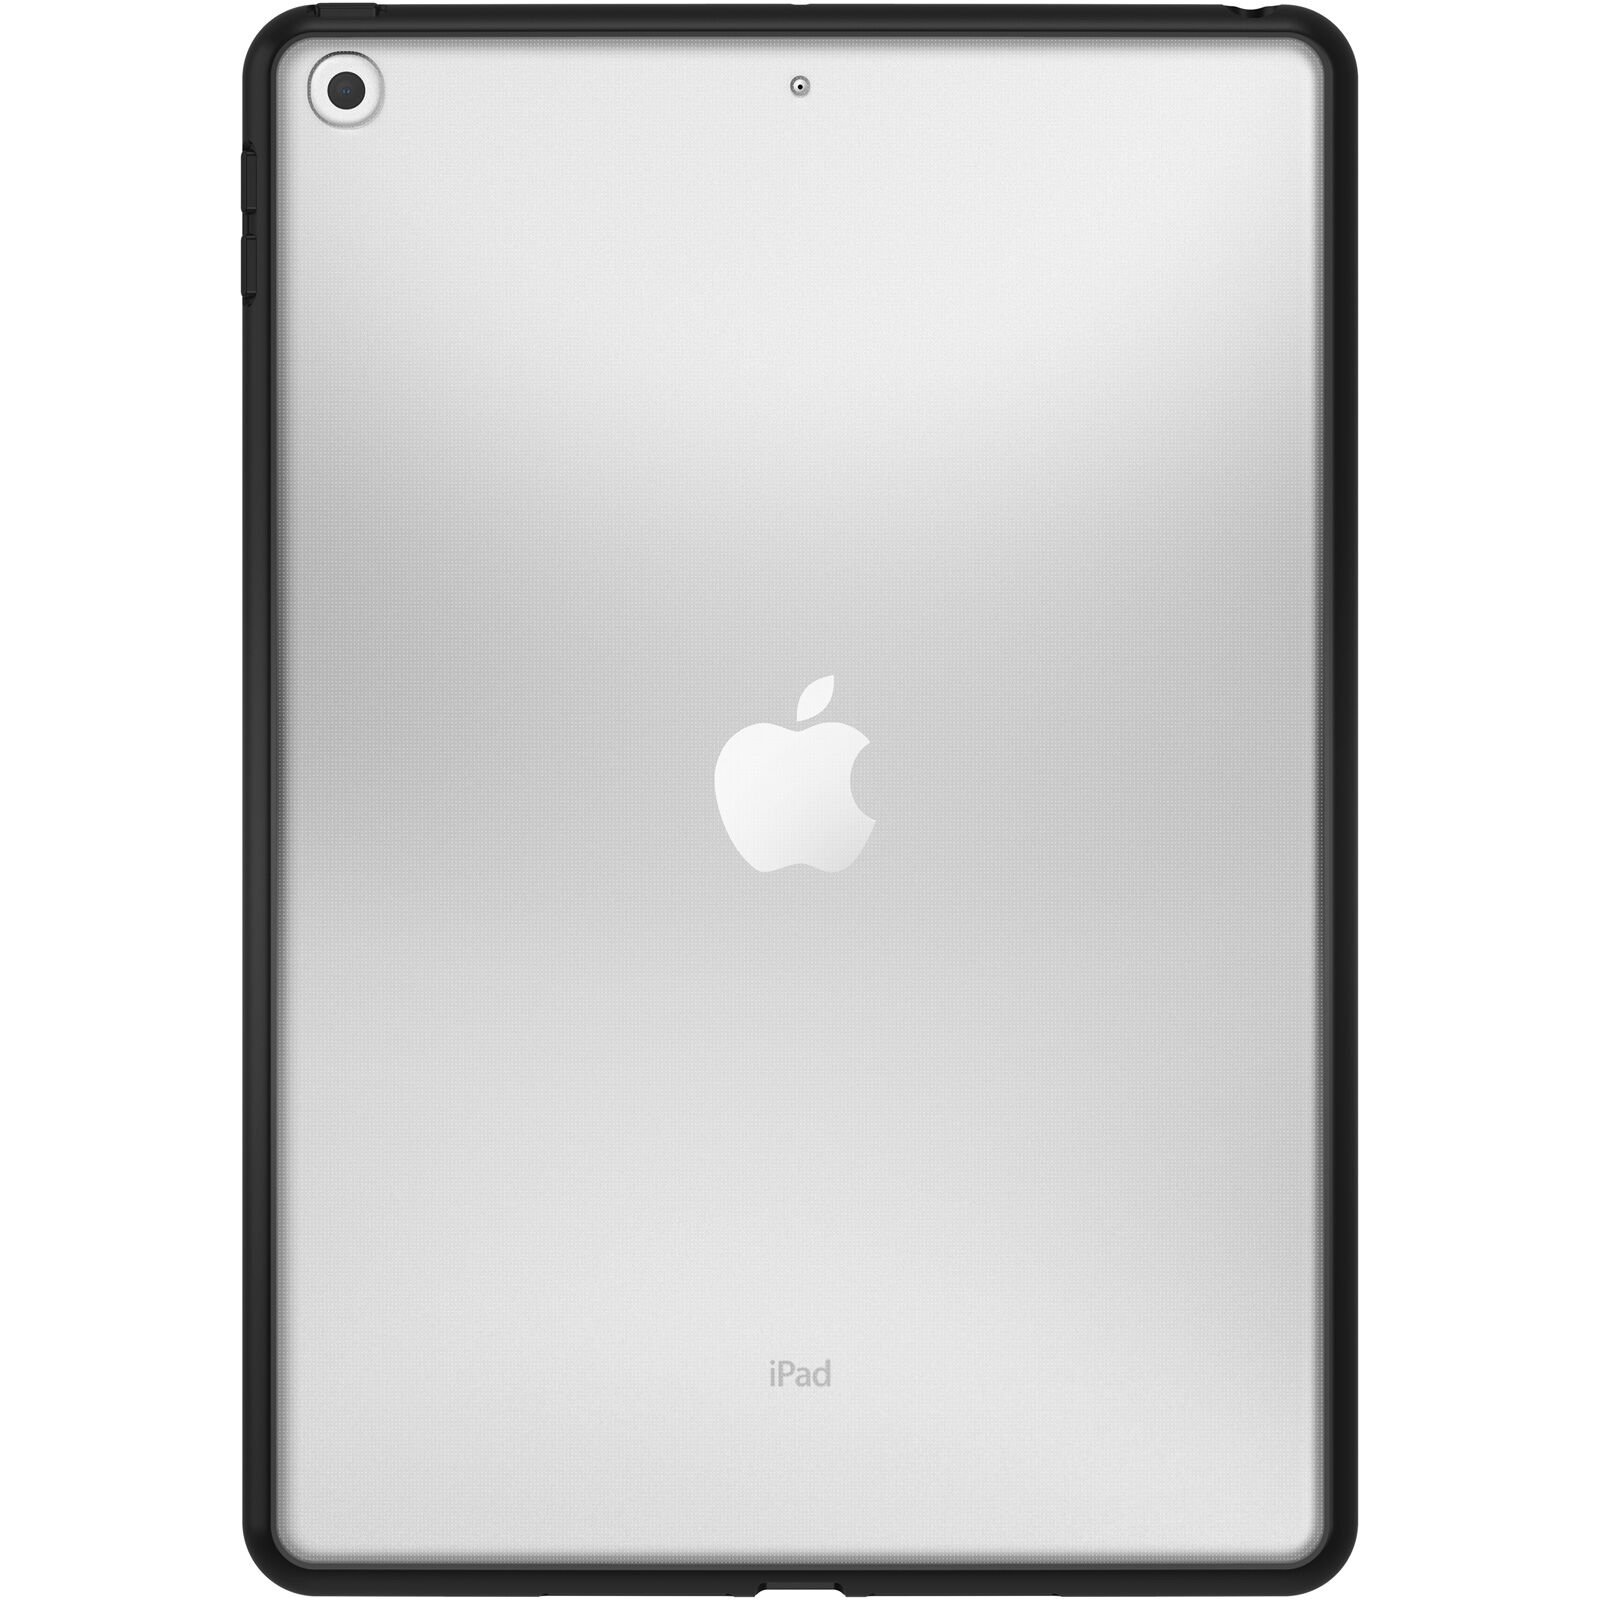 Cover React iPad 10.2 7th Gen (2019) Black Crystal